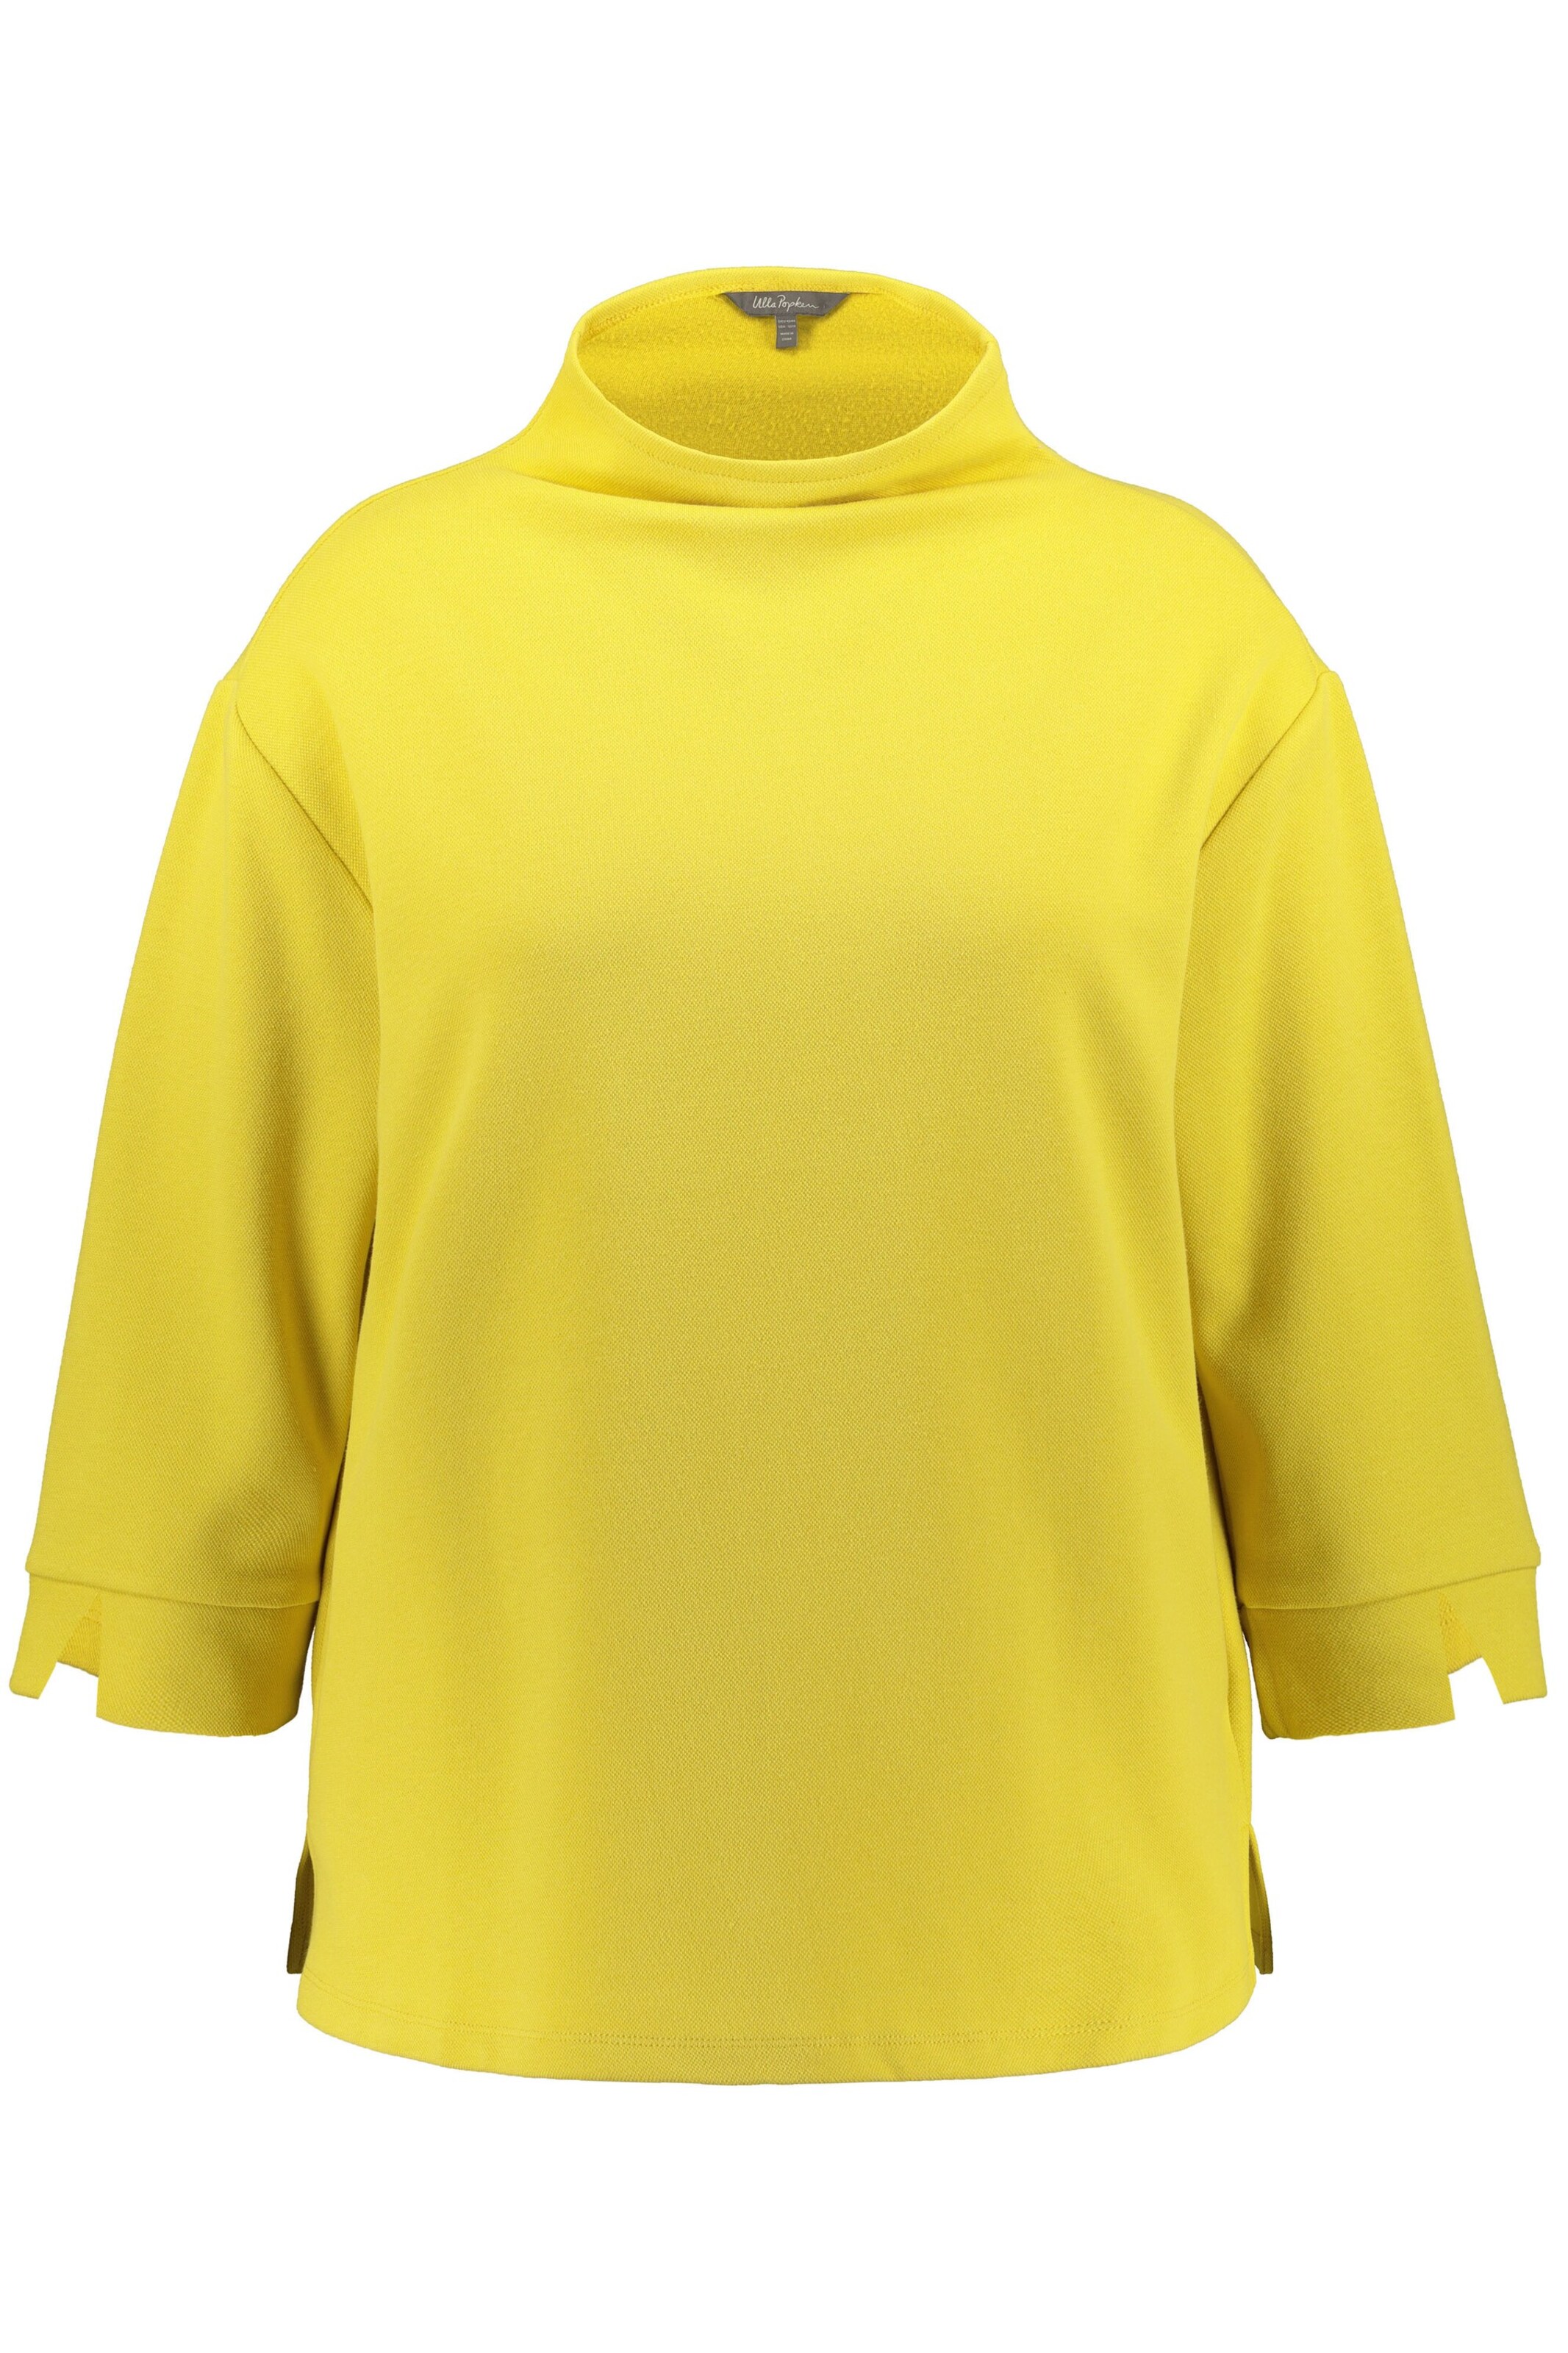 Frauen Sweat Ulla Popken Sweatshirt in Neongelb - WI11826